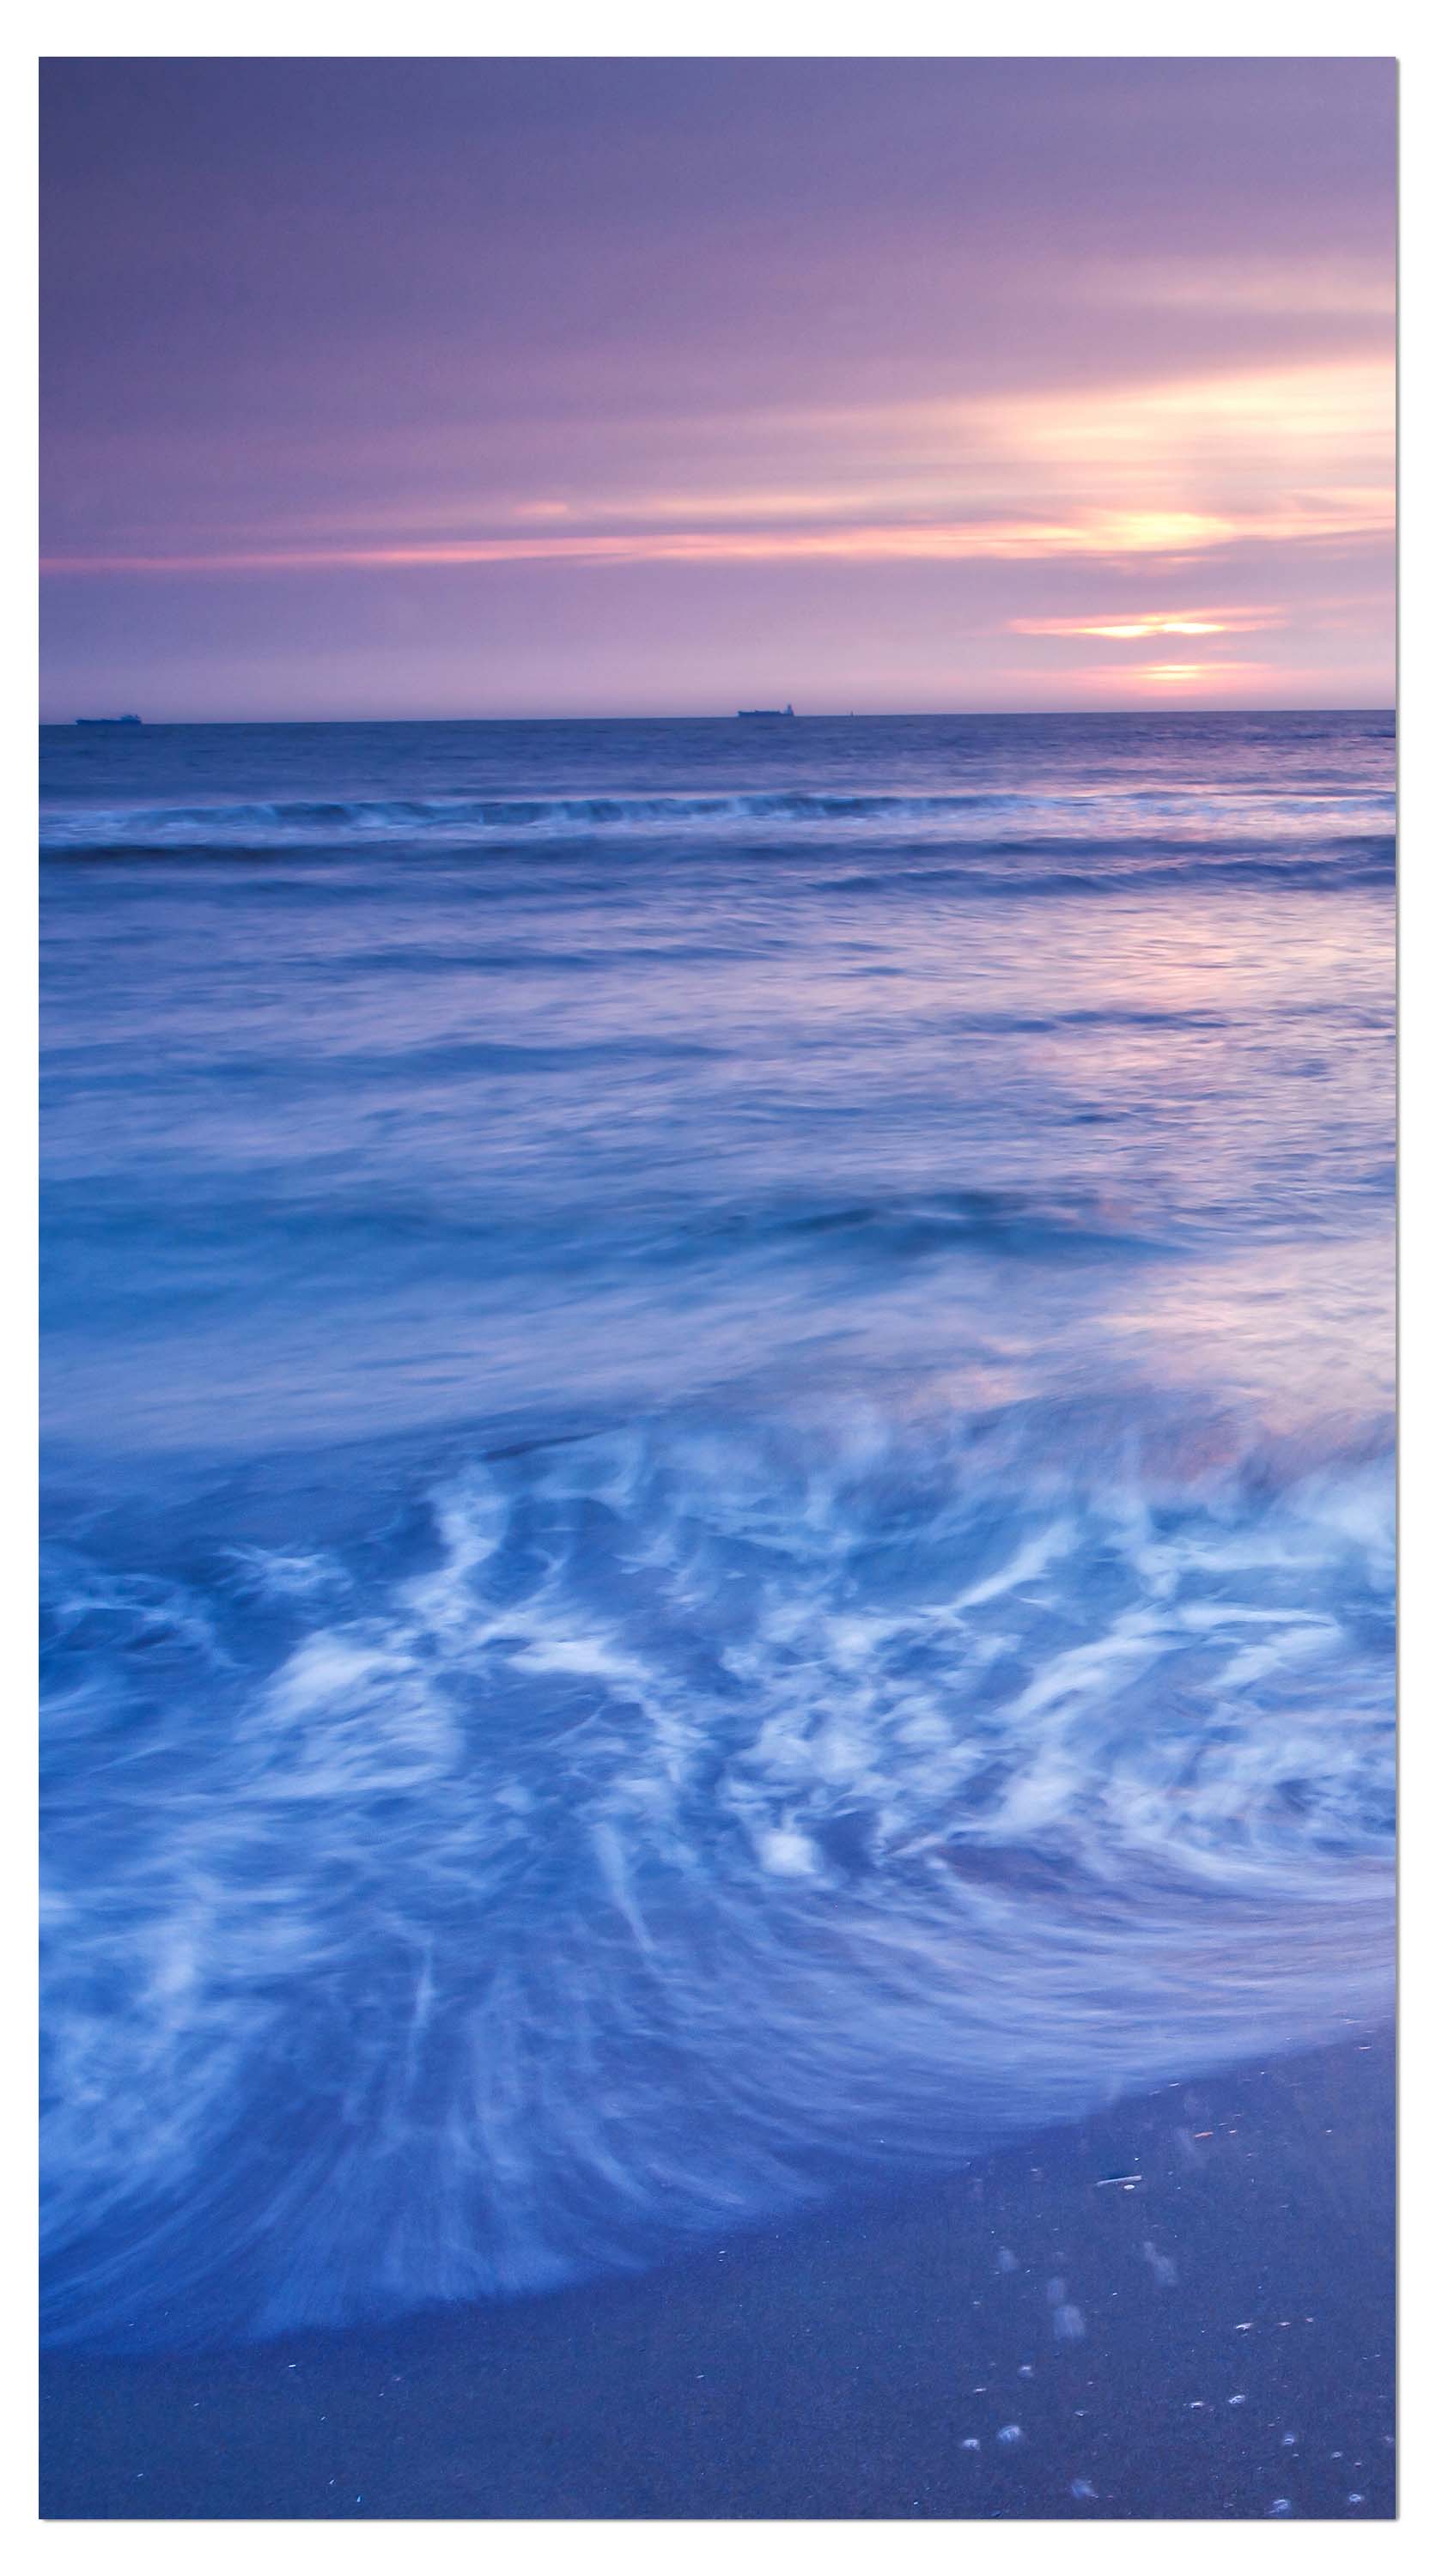 Garderobe Strand Wellen bei Sonnenuntergang M0895 entdecken - Bild 4